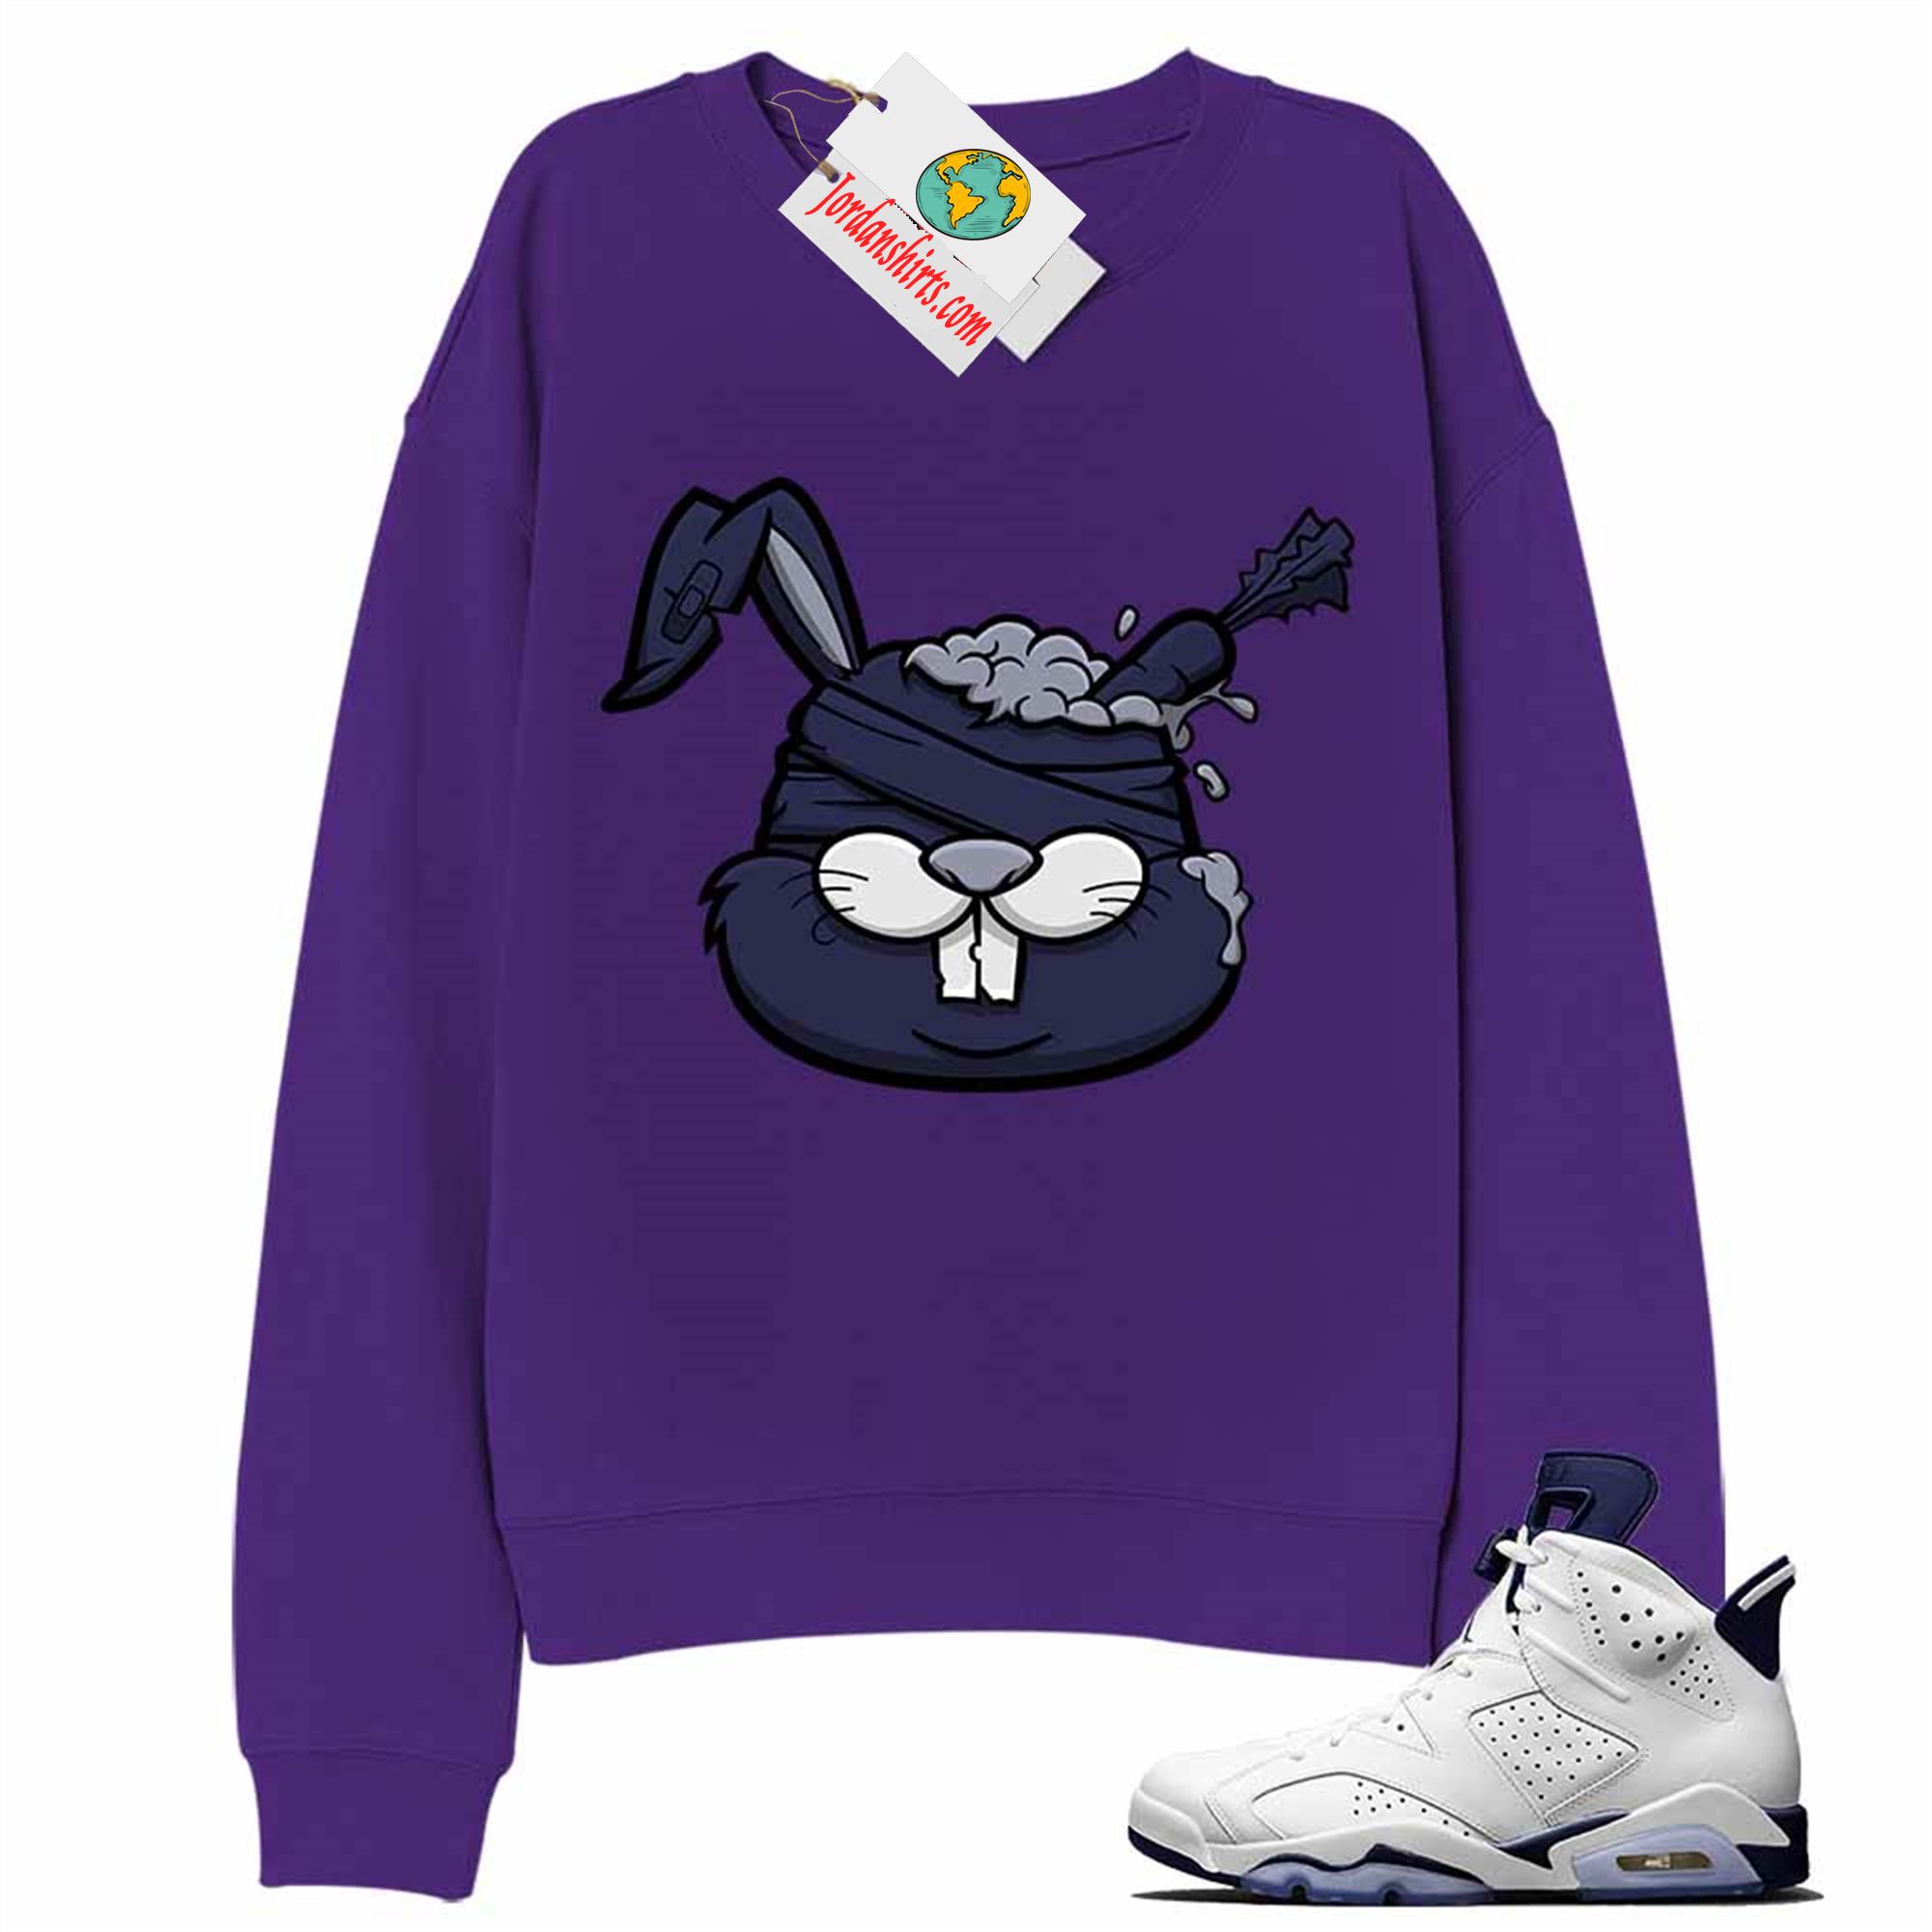 Jordan 6 Sweatshirt, Zombie Bunny Purple Sweatshirt Air Jordan 6 Midnight Navy 6s Full Size Up To 5xl